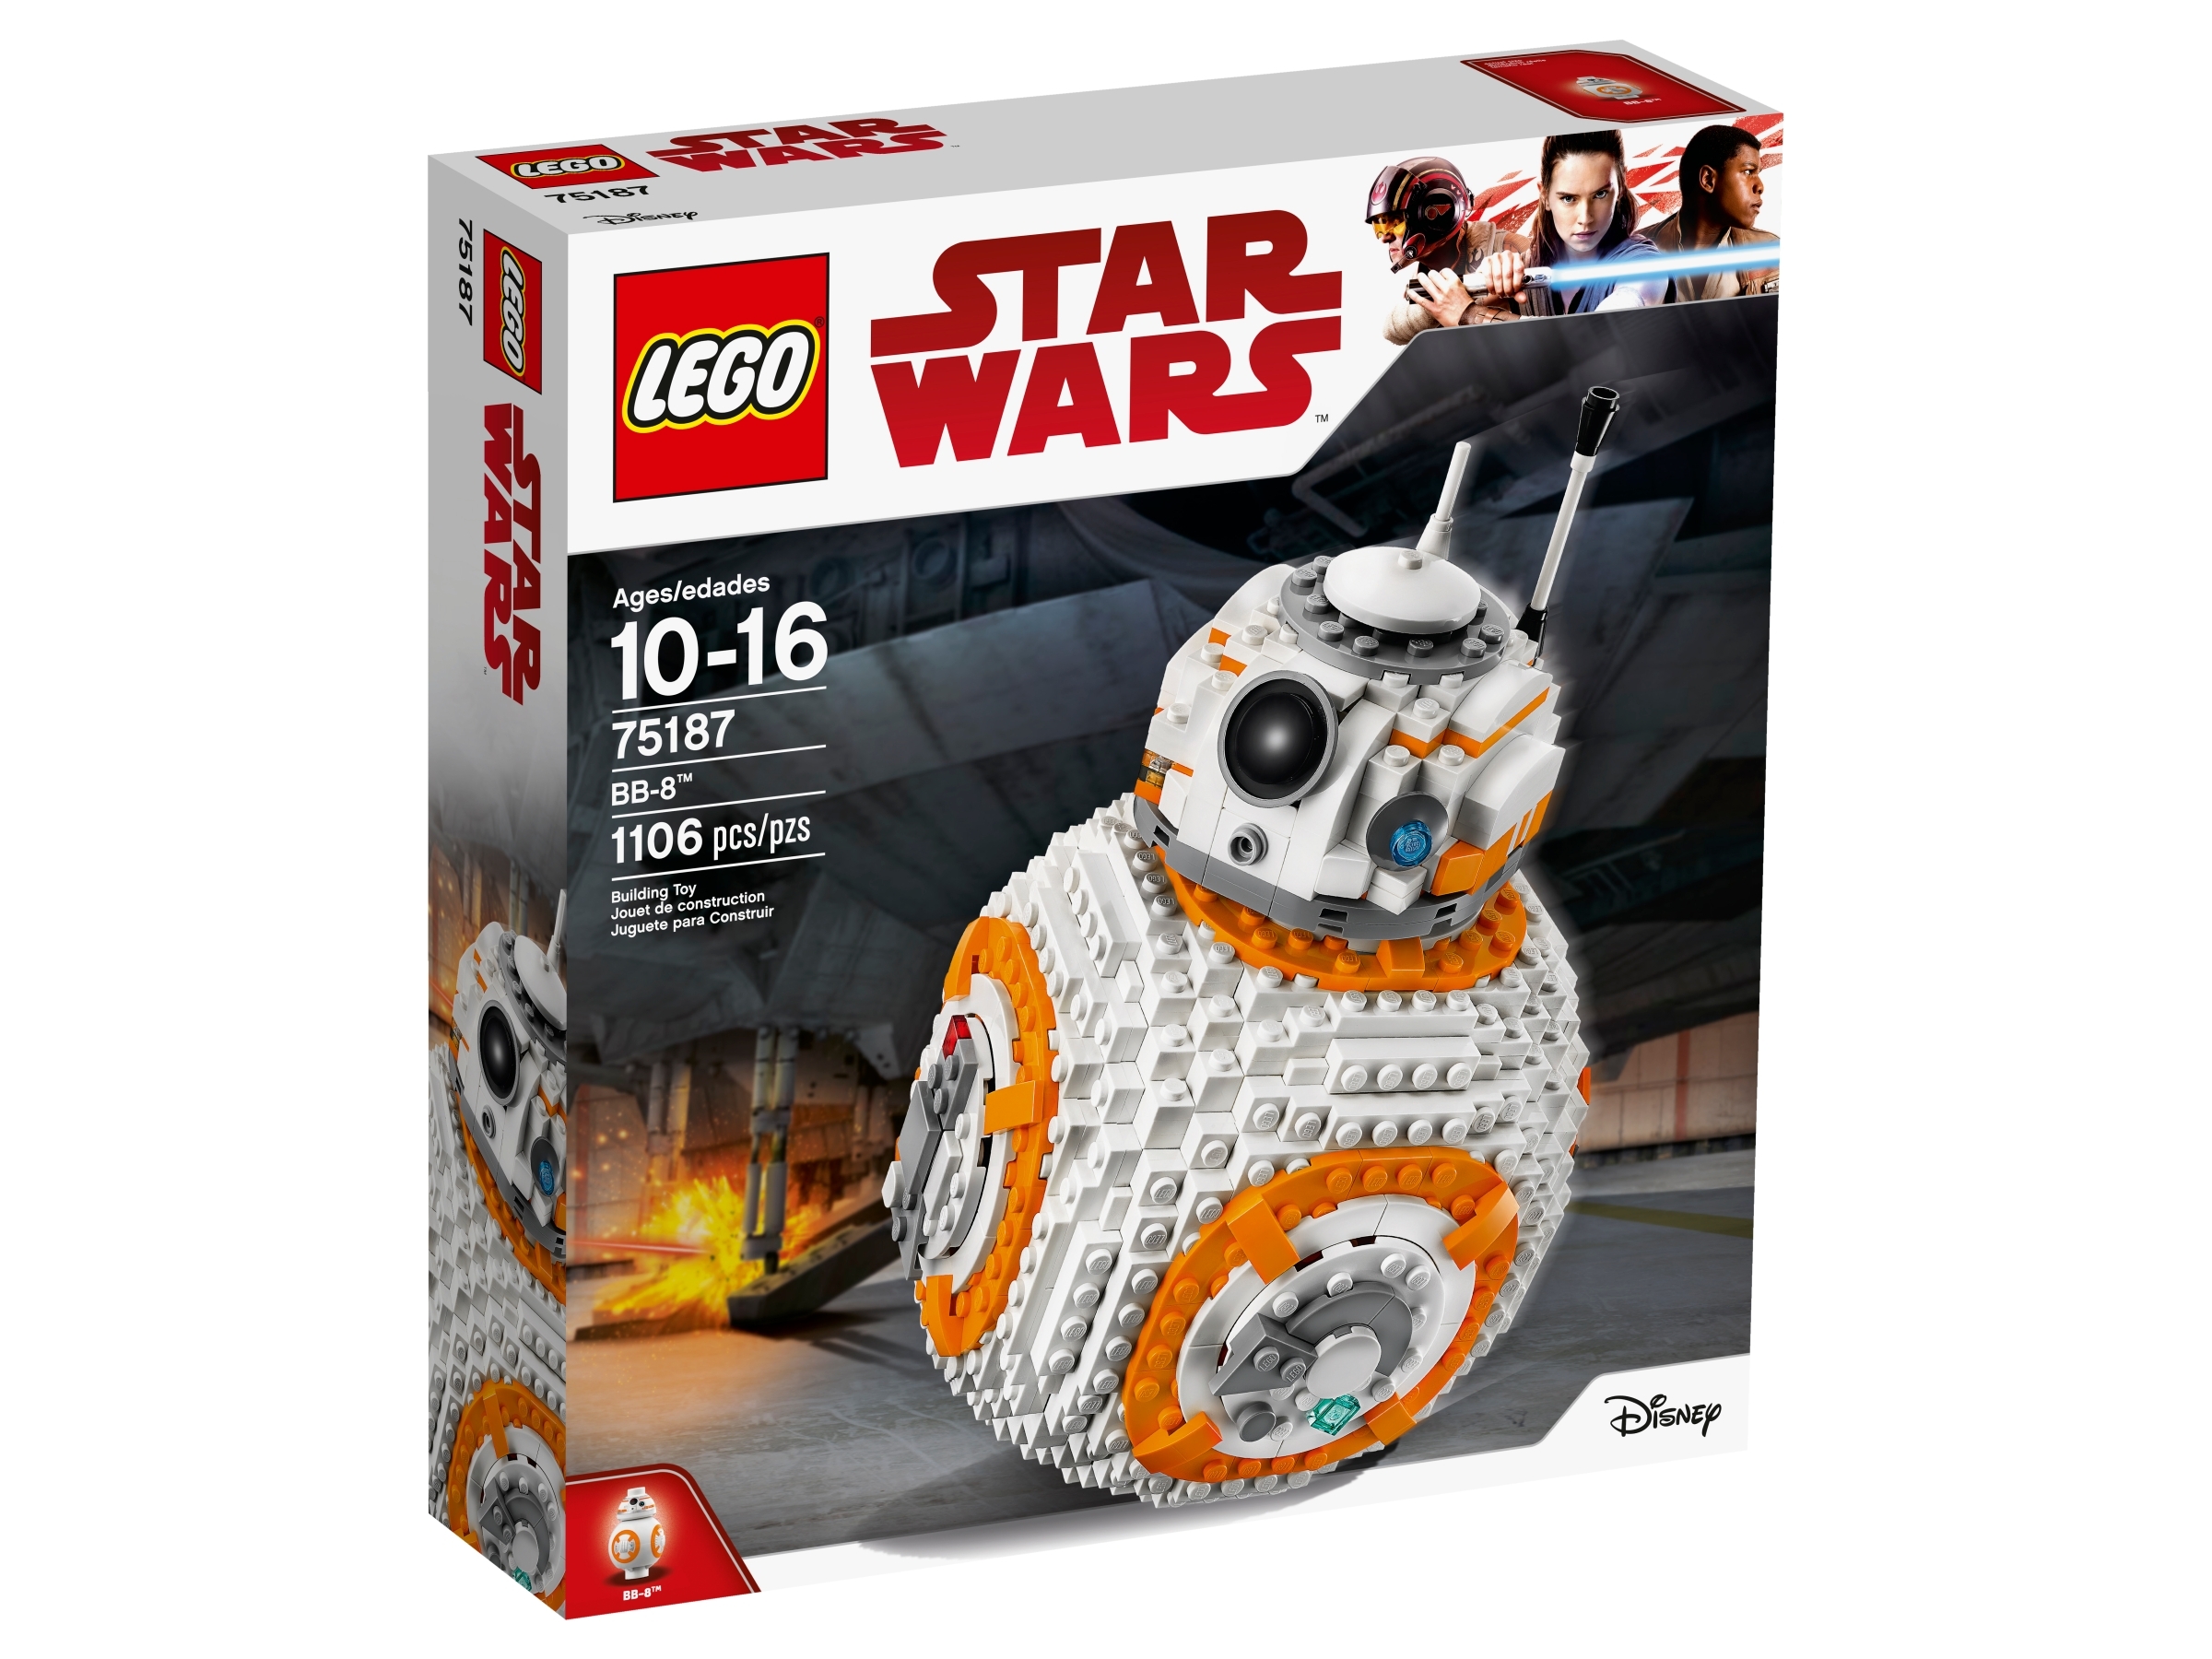 Lego Star Wars Minifigures BB-8 